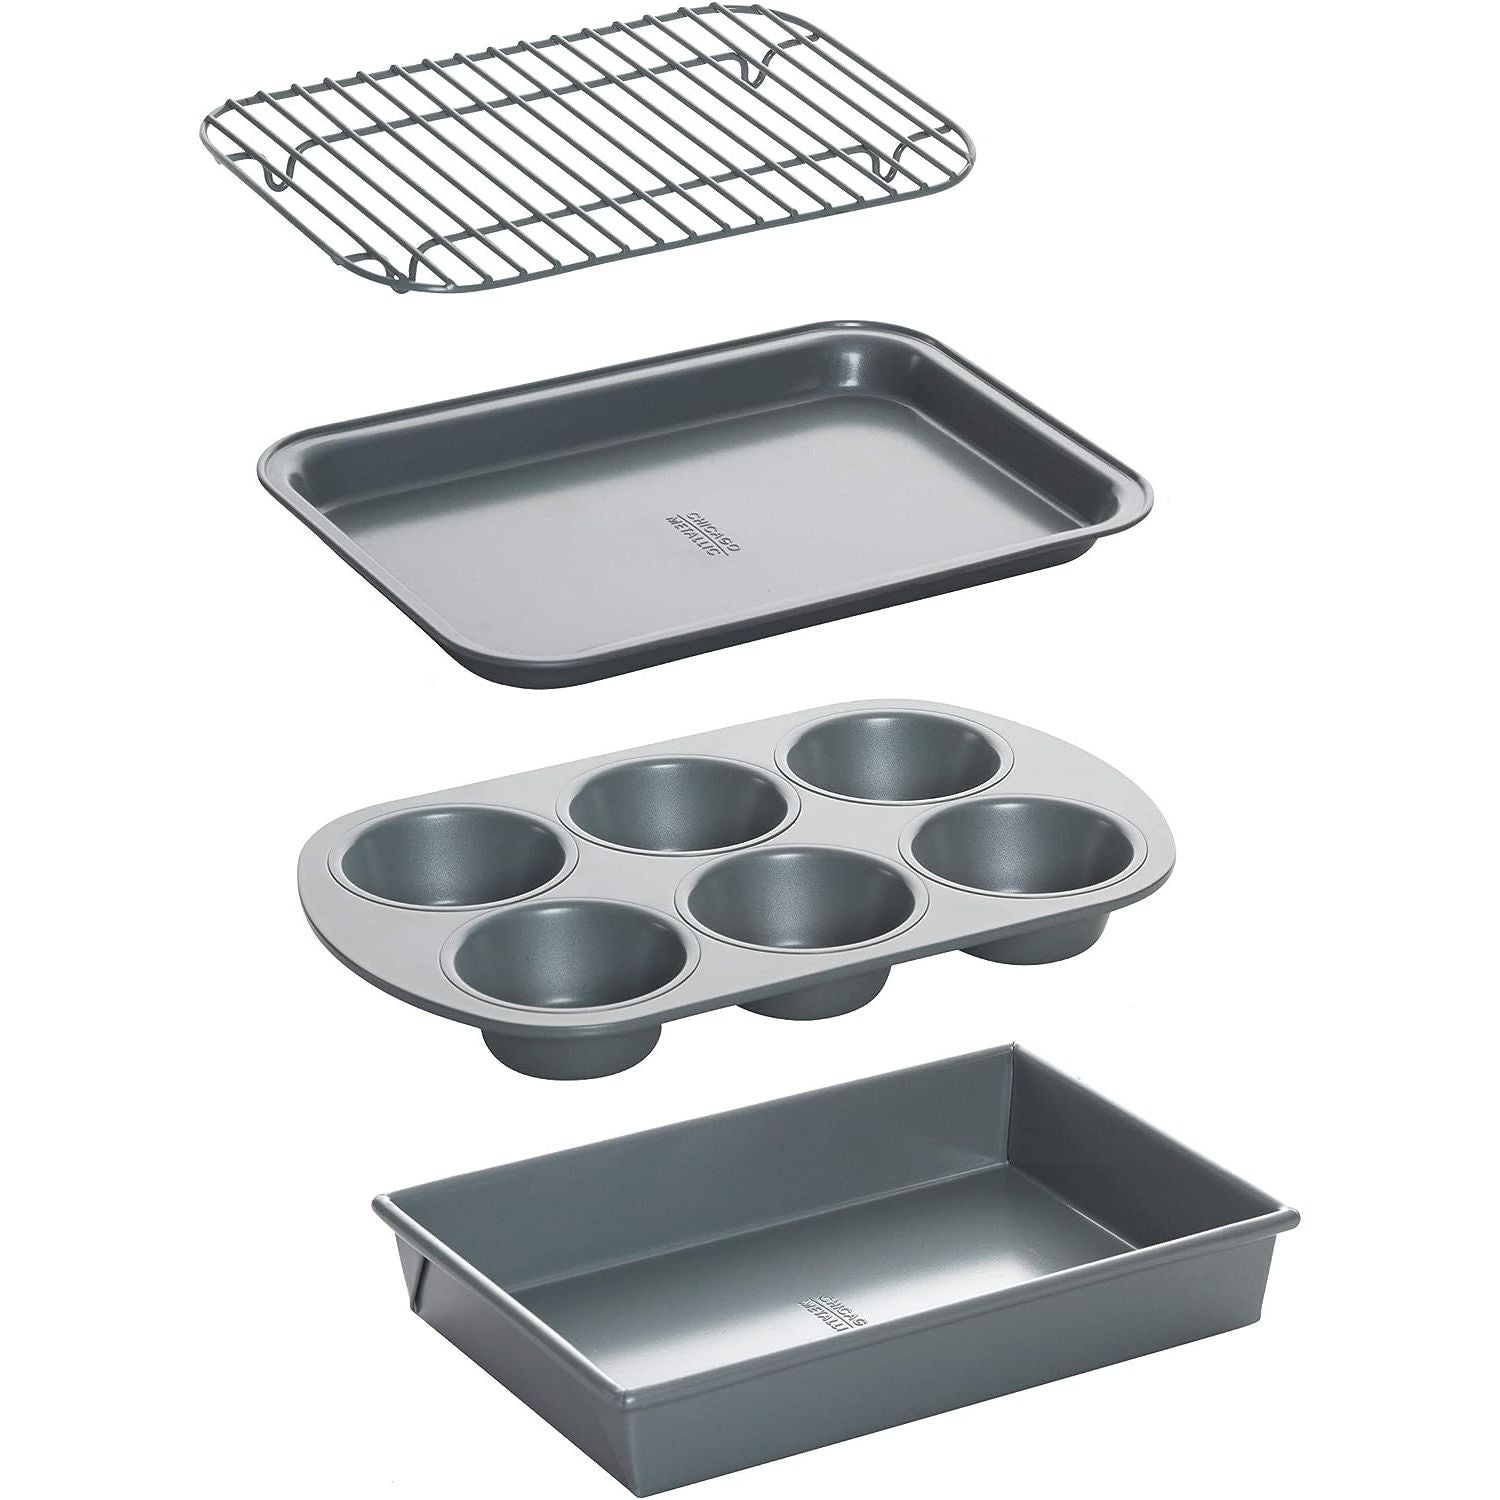 Bakeware Sets: Stainless Steel & Nonstick Bakeware